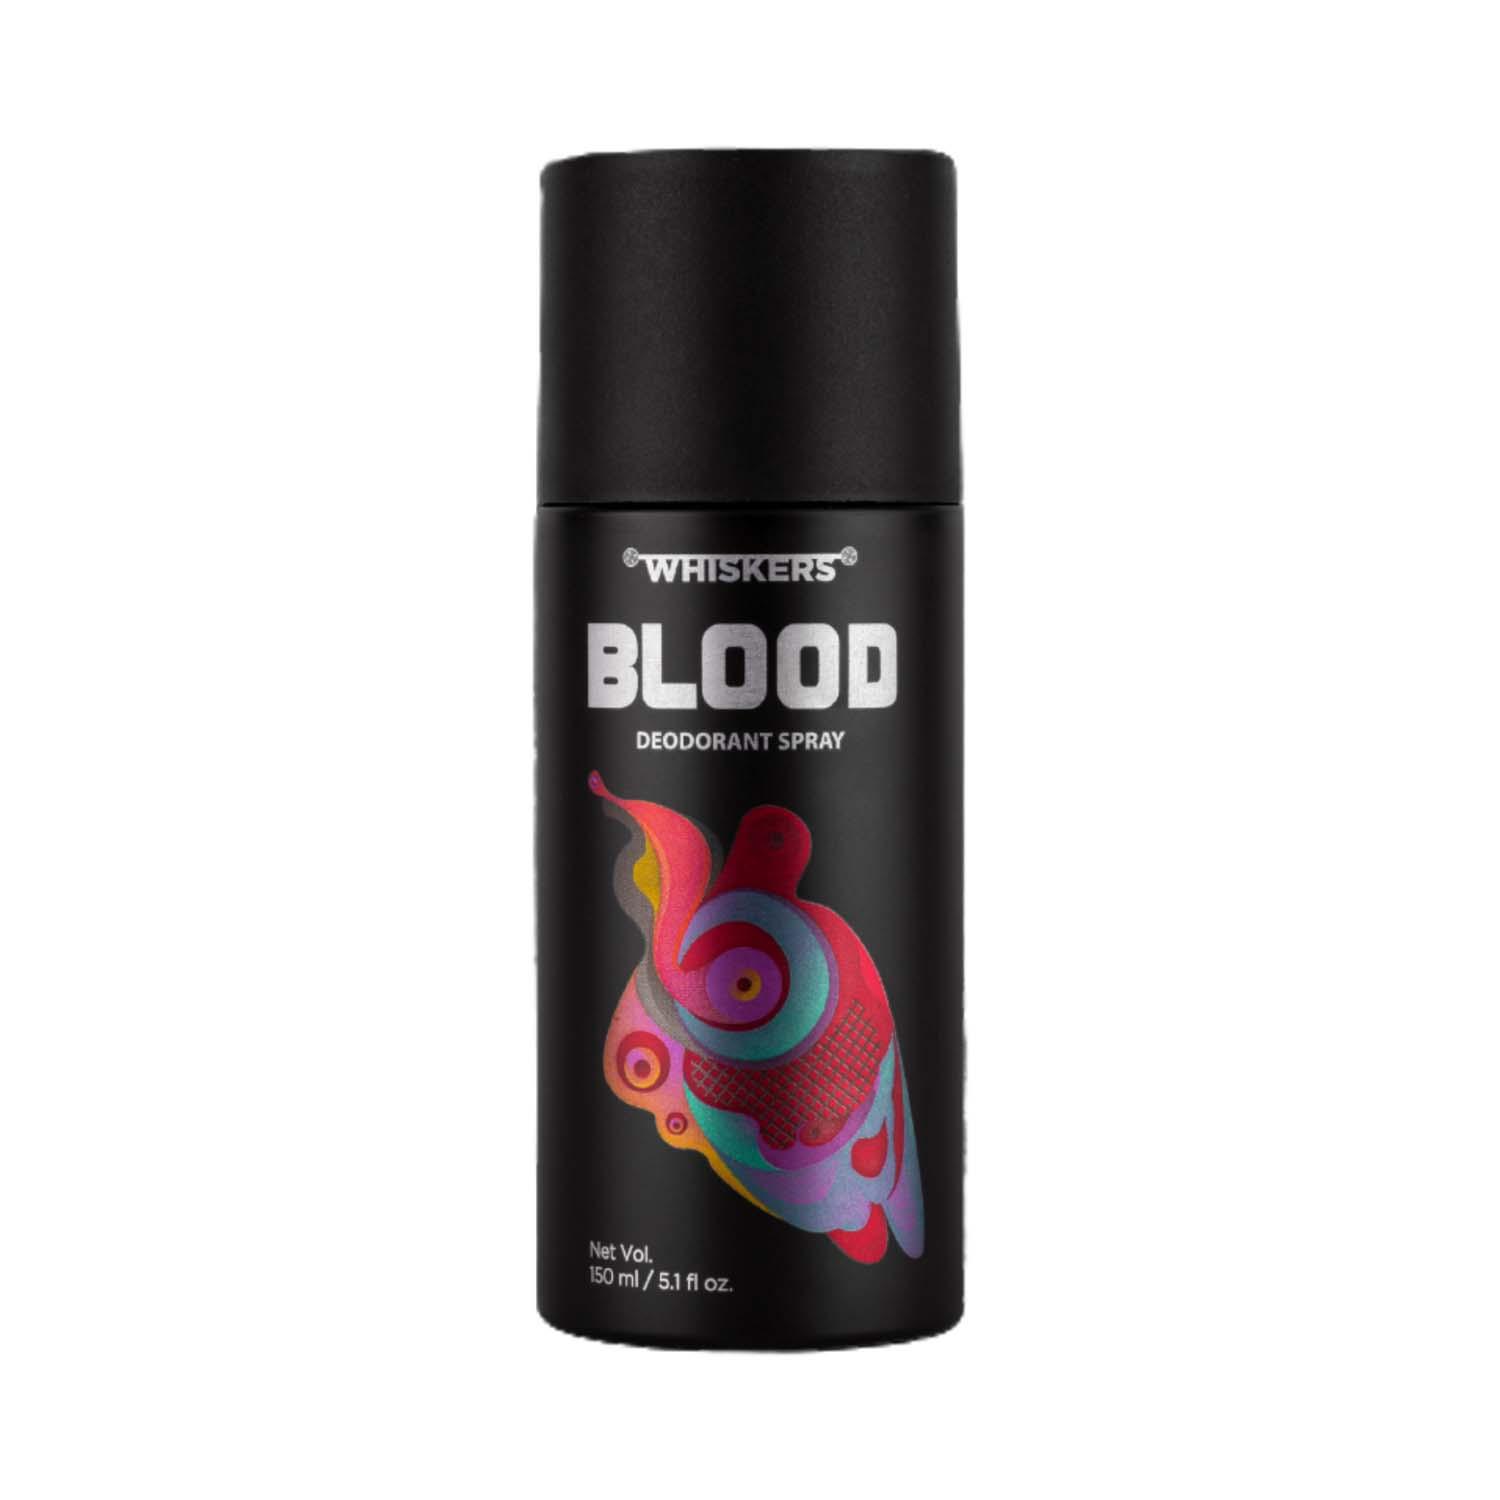 WHISKERS Blood Deodorant Spray For Men (150 ml)